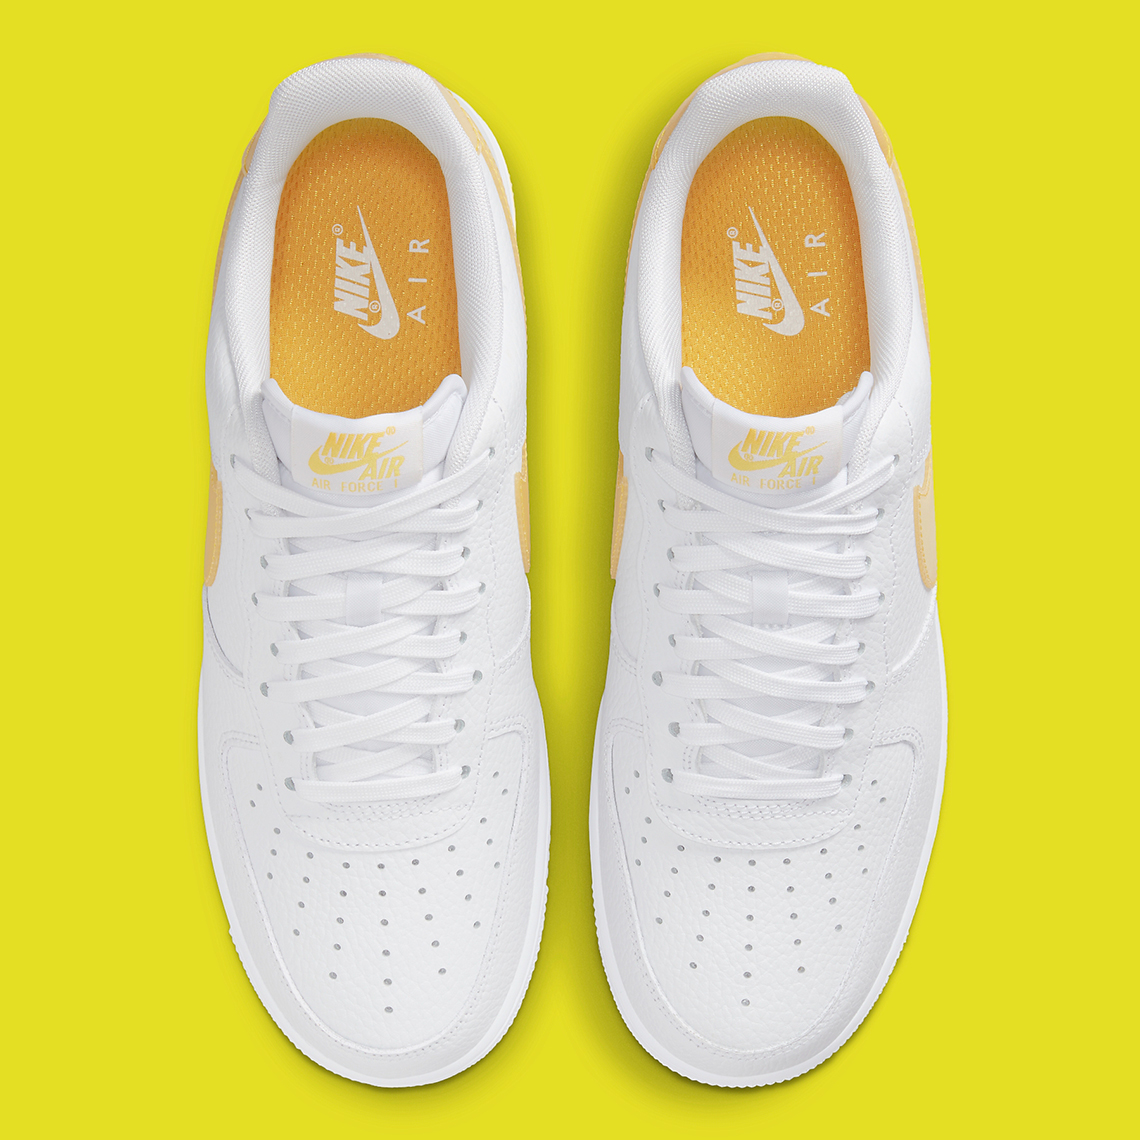 nike huarache stockx women gold sandals shoes Jumbo Yellow Dv3505 101 8